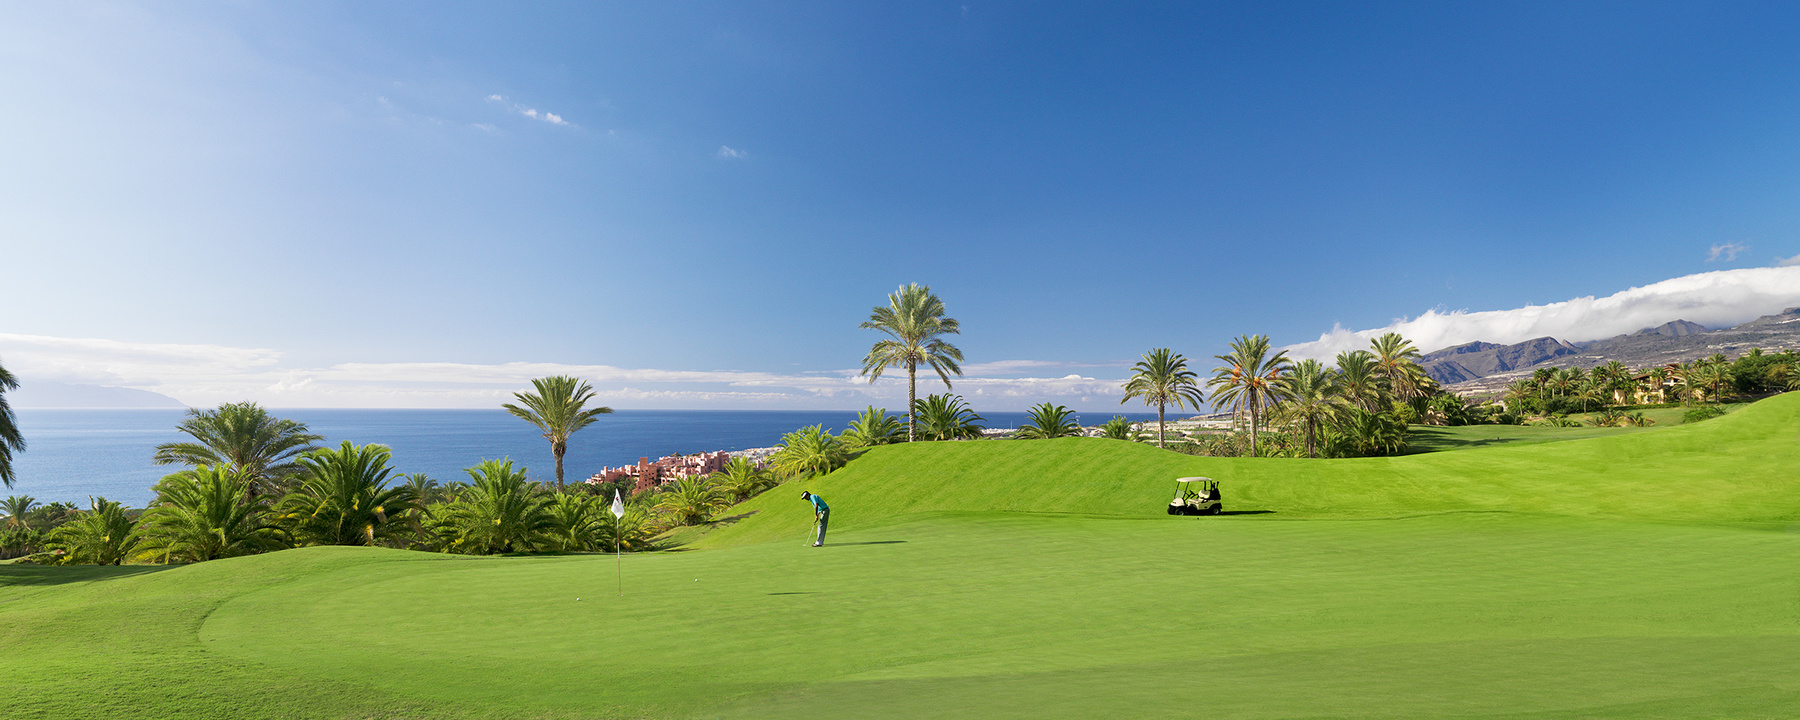 Golf course-Generic-Landscape